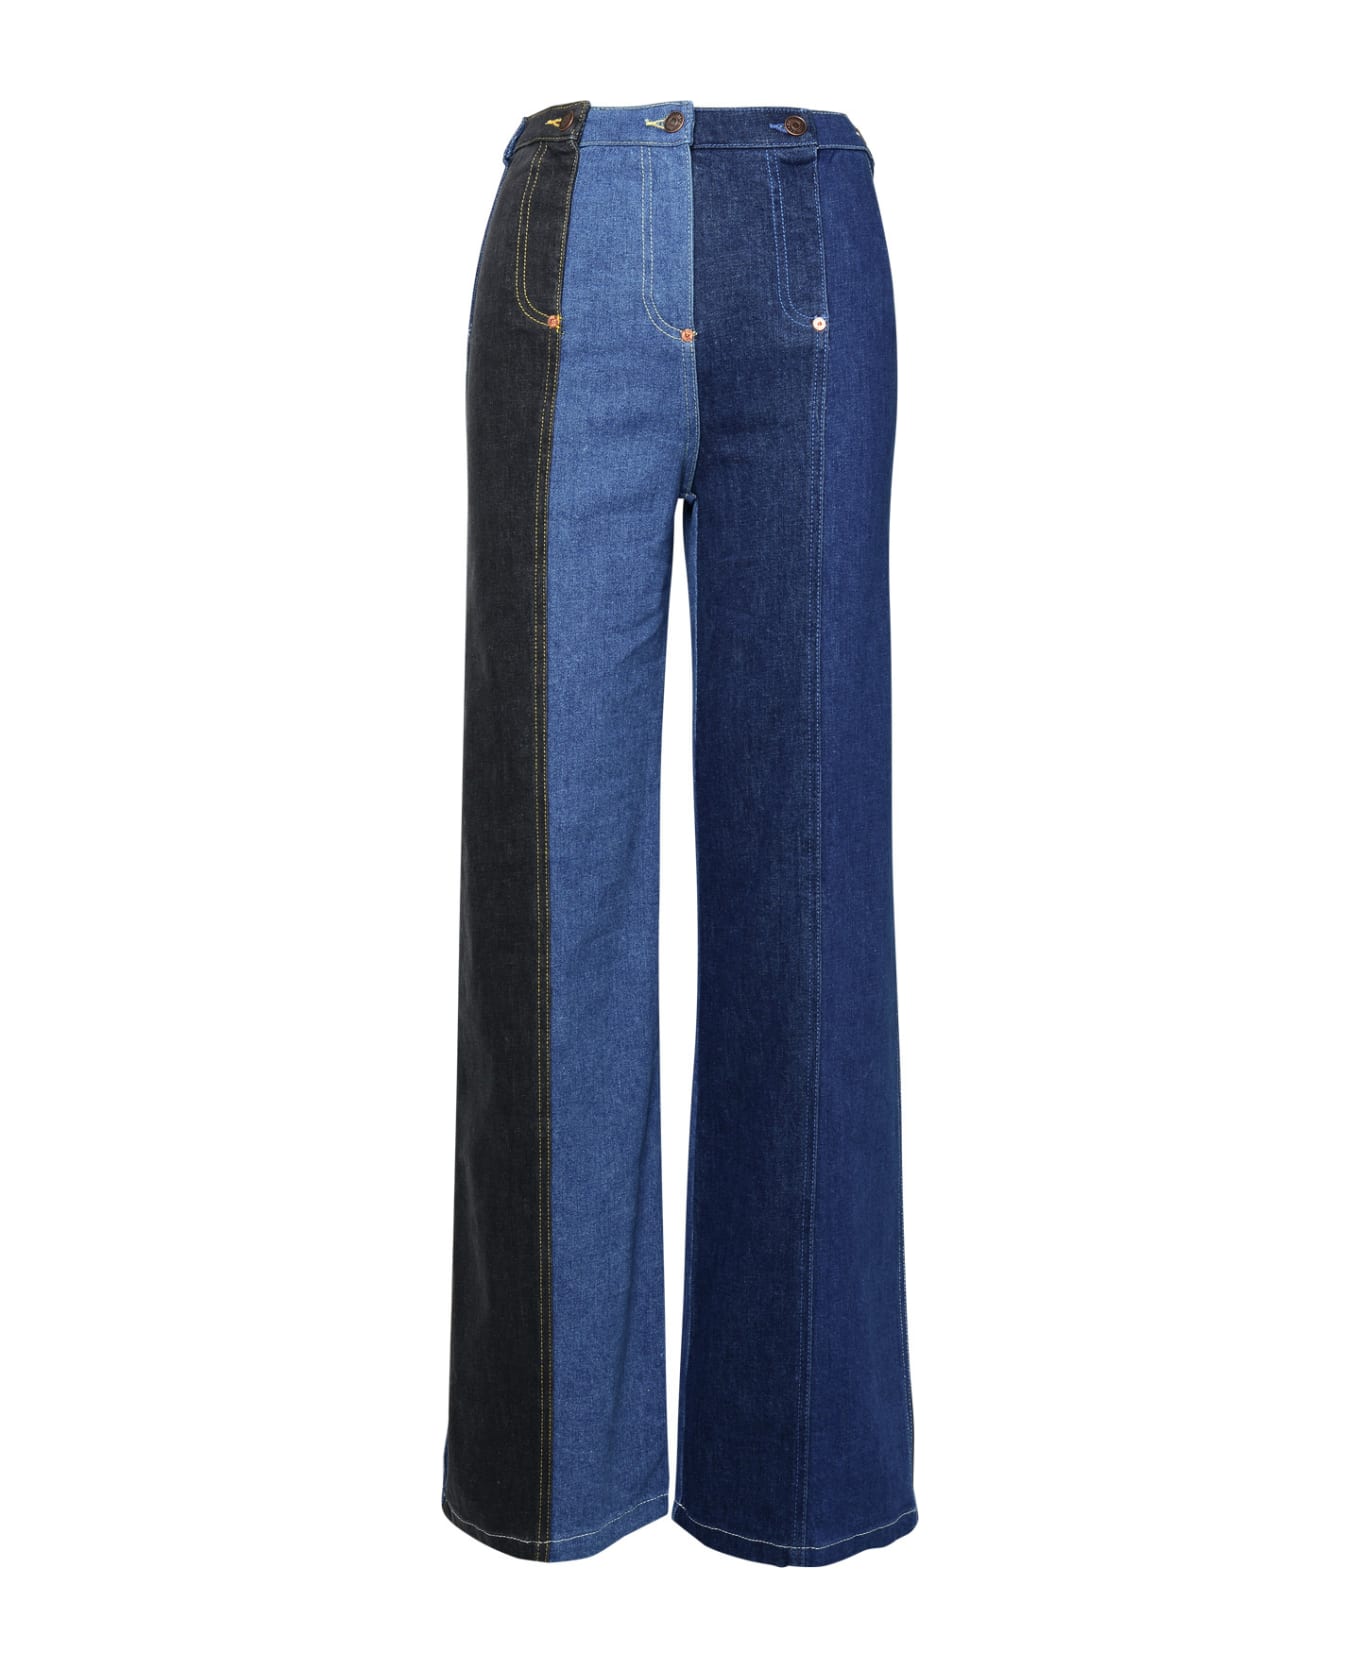 M05CH1N0 Jeans Blue Cotton Jeans - Denim デニム